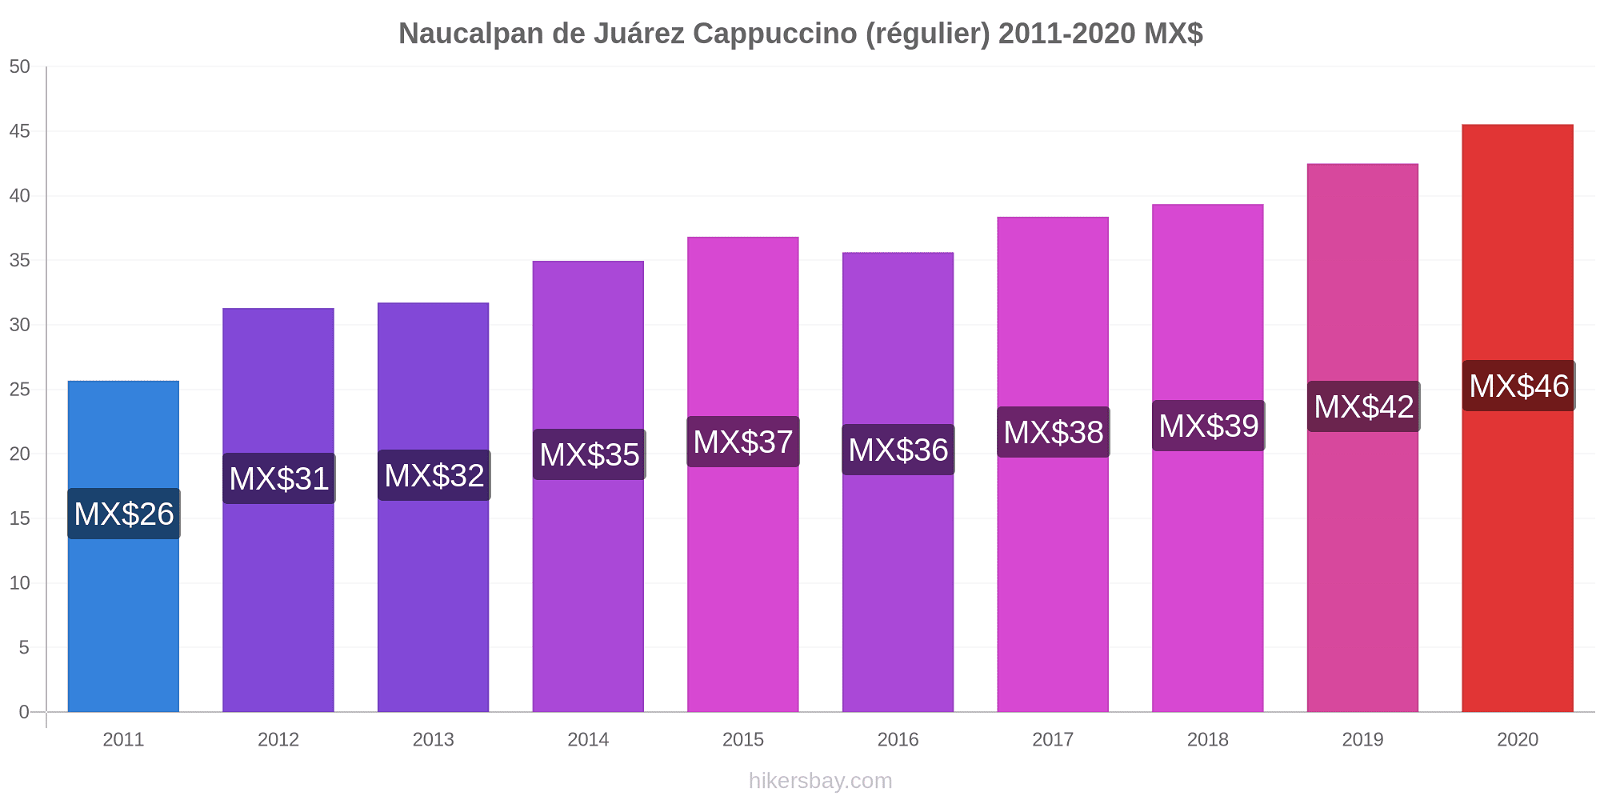 Naucalpan de Juárez changements de prix Cappuccino (régulier) hikersbay.com